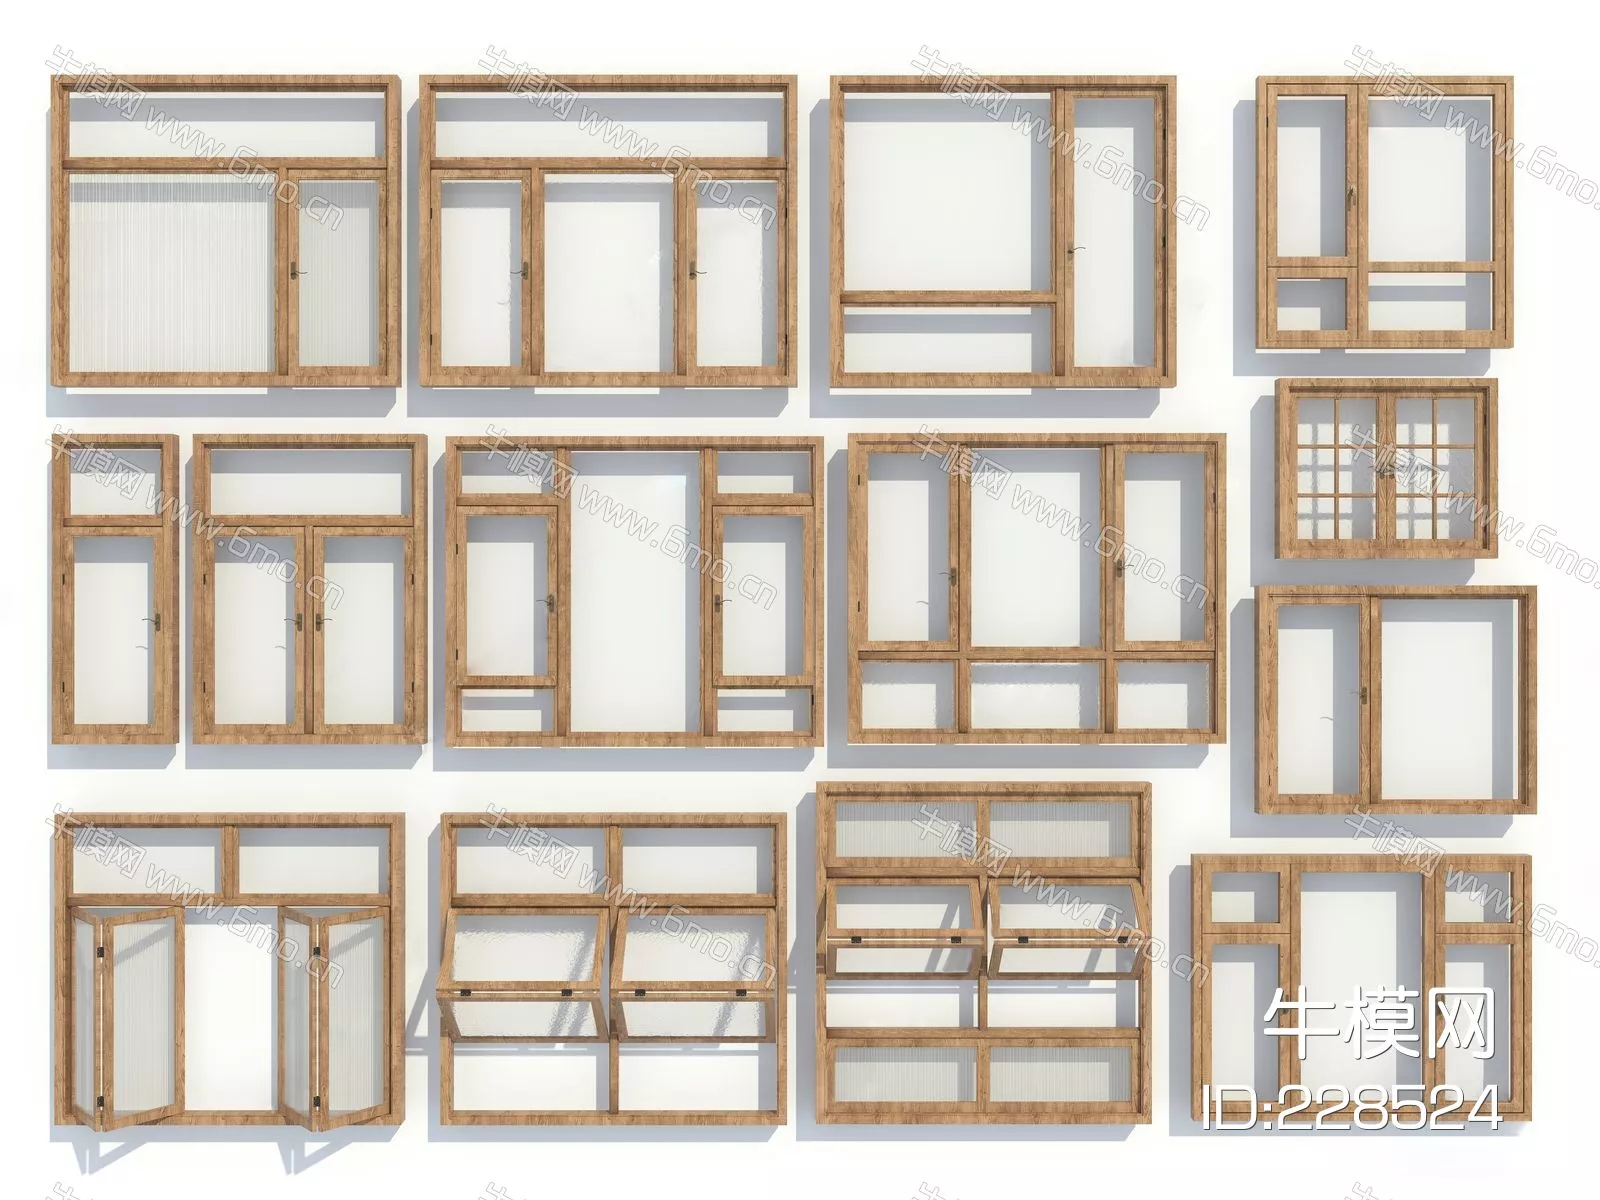 JAPANESE DOOR AND WINDOWS - SKETCHUP 3D MODEL - VRAY - 228524